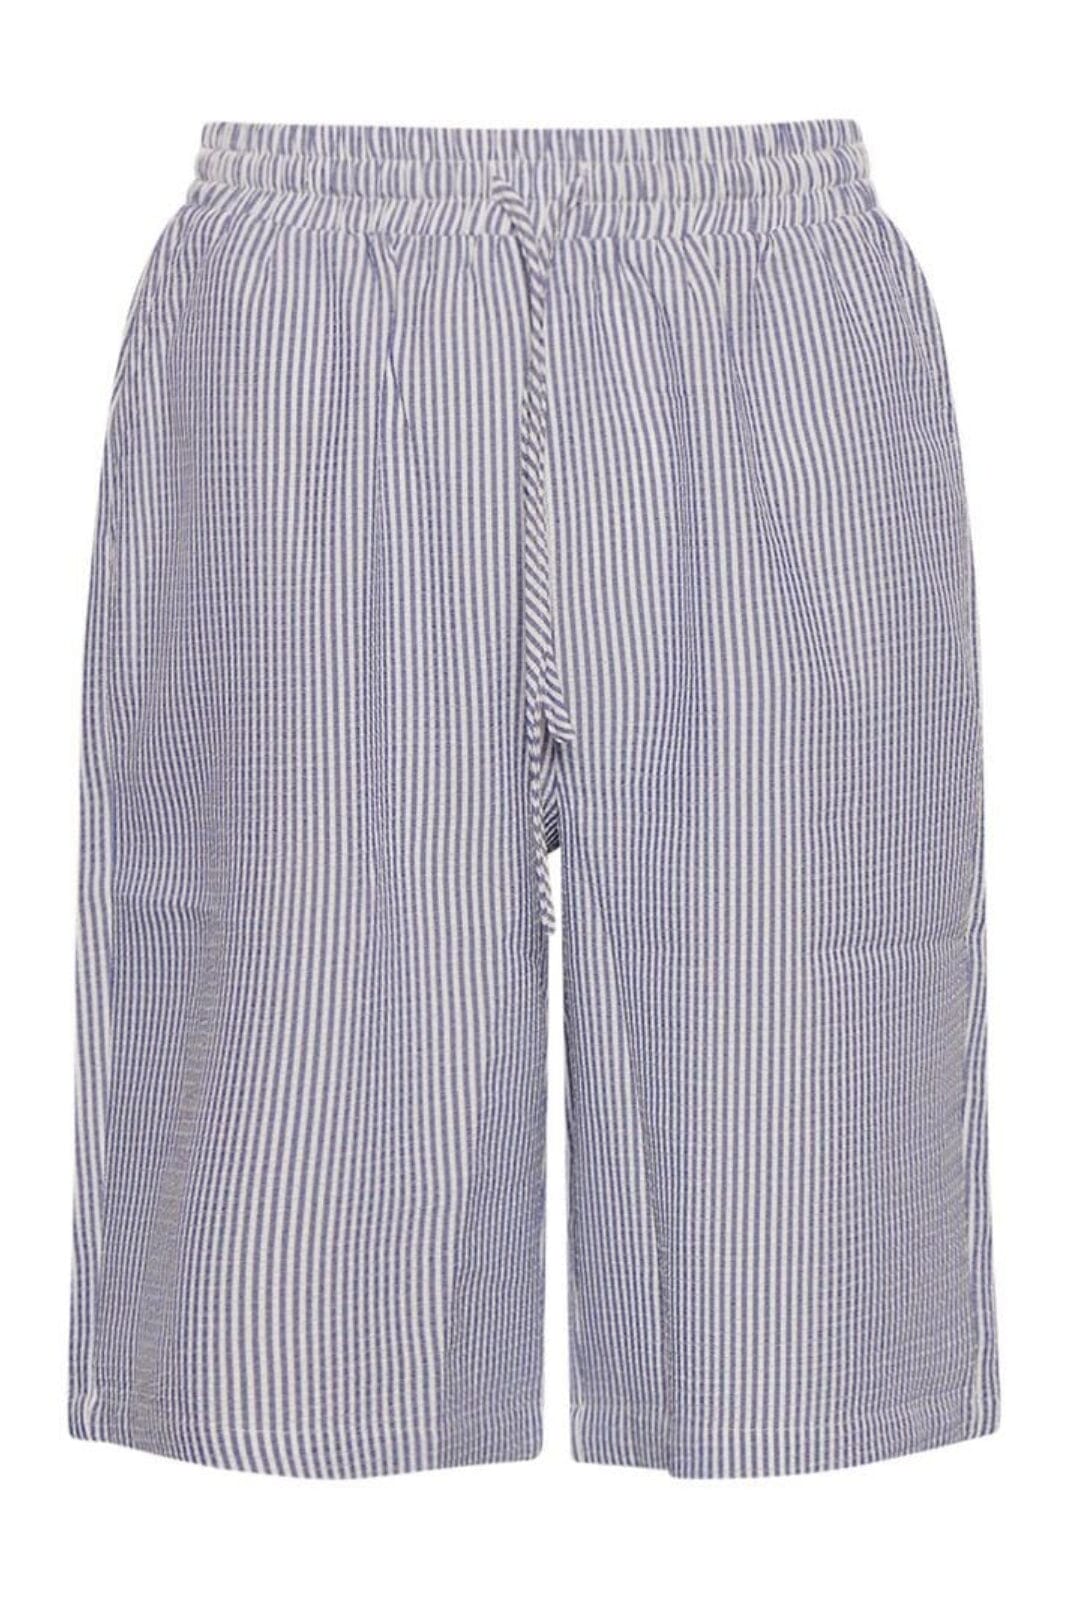 Noella - Sabine Shorts - Blue Stripe Shorts 